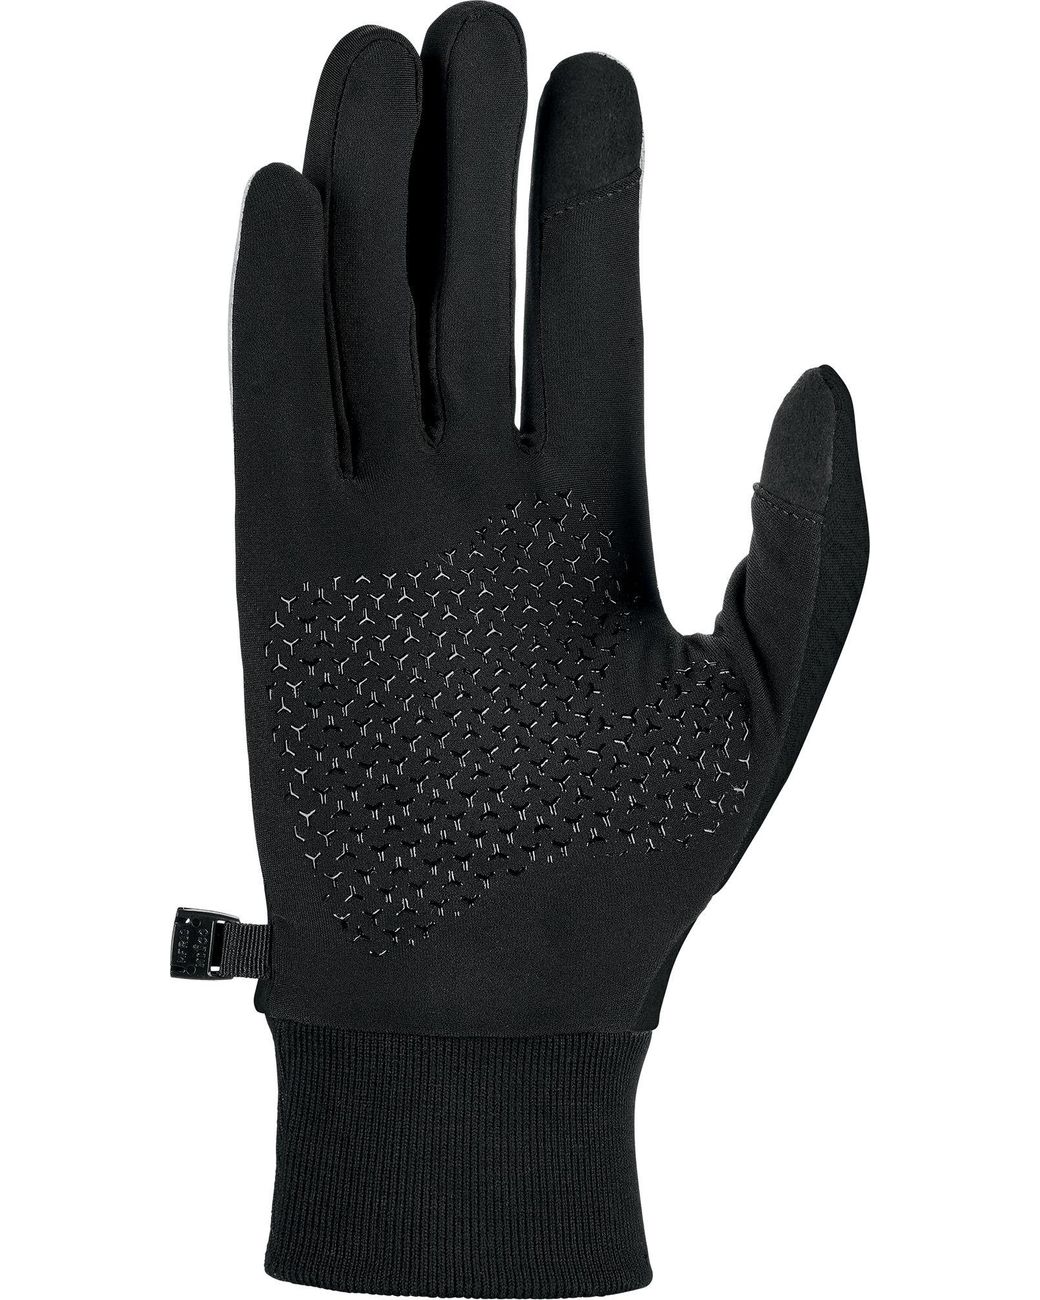 Women’s Outdoor Spirit Sweater Fleece Tech Gloves Black S/M #NKV9F-1105 